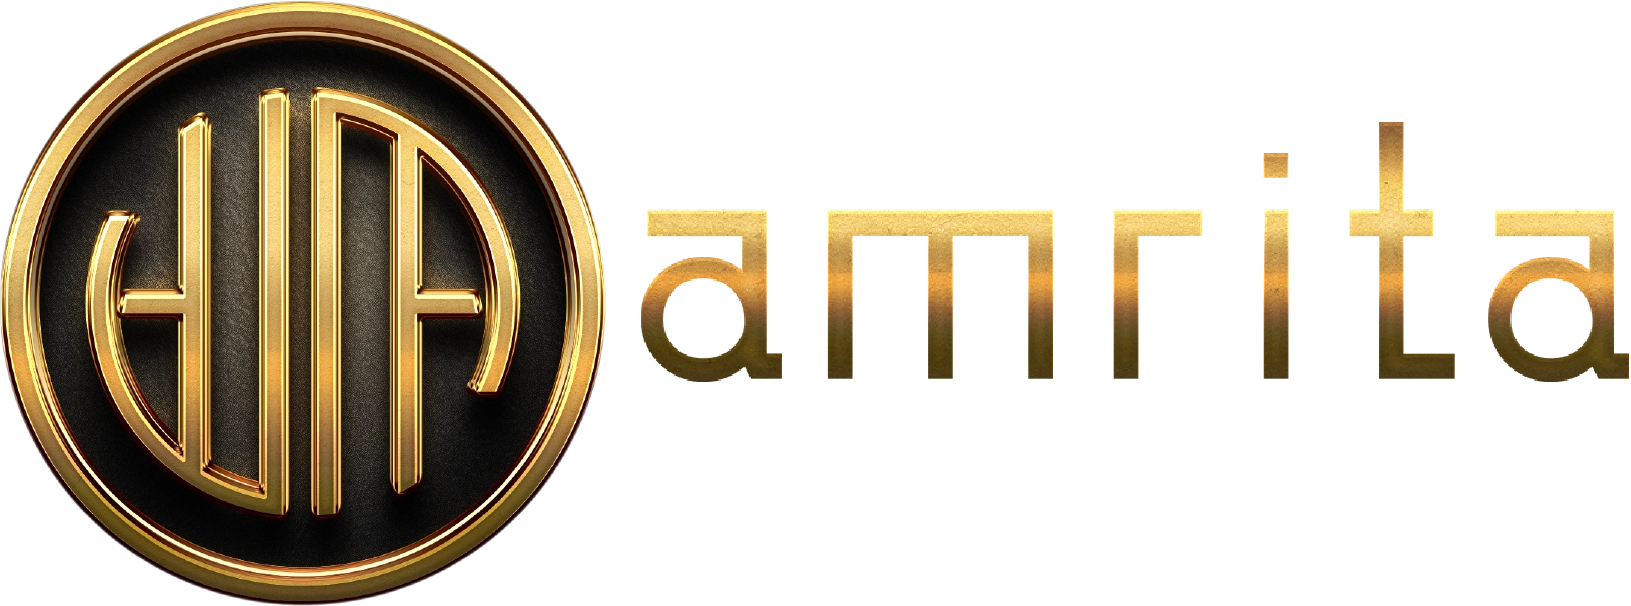 Brandfetch | Amrita Technologies Logos & Brand Assets